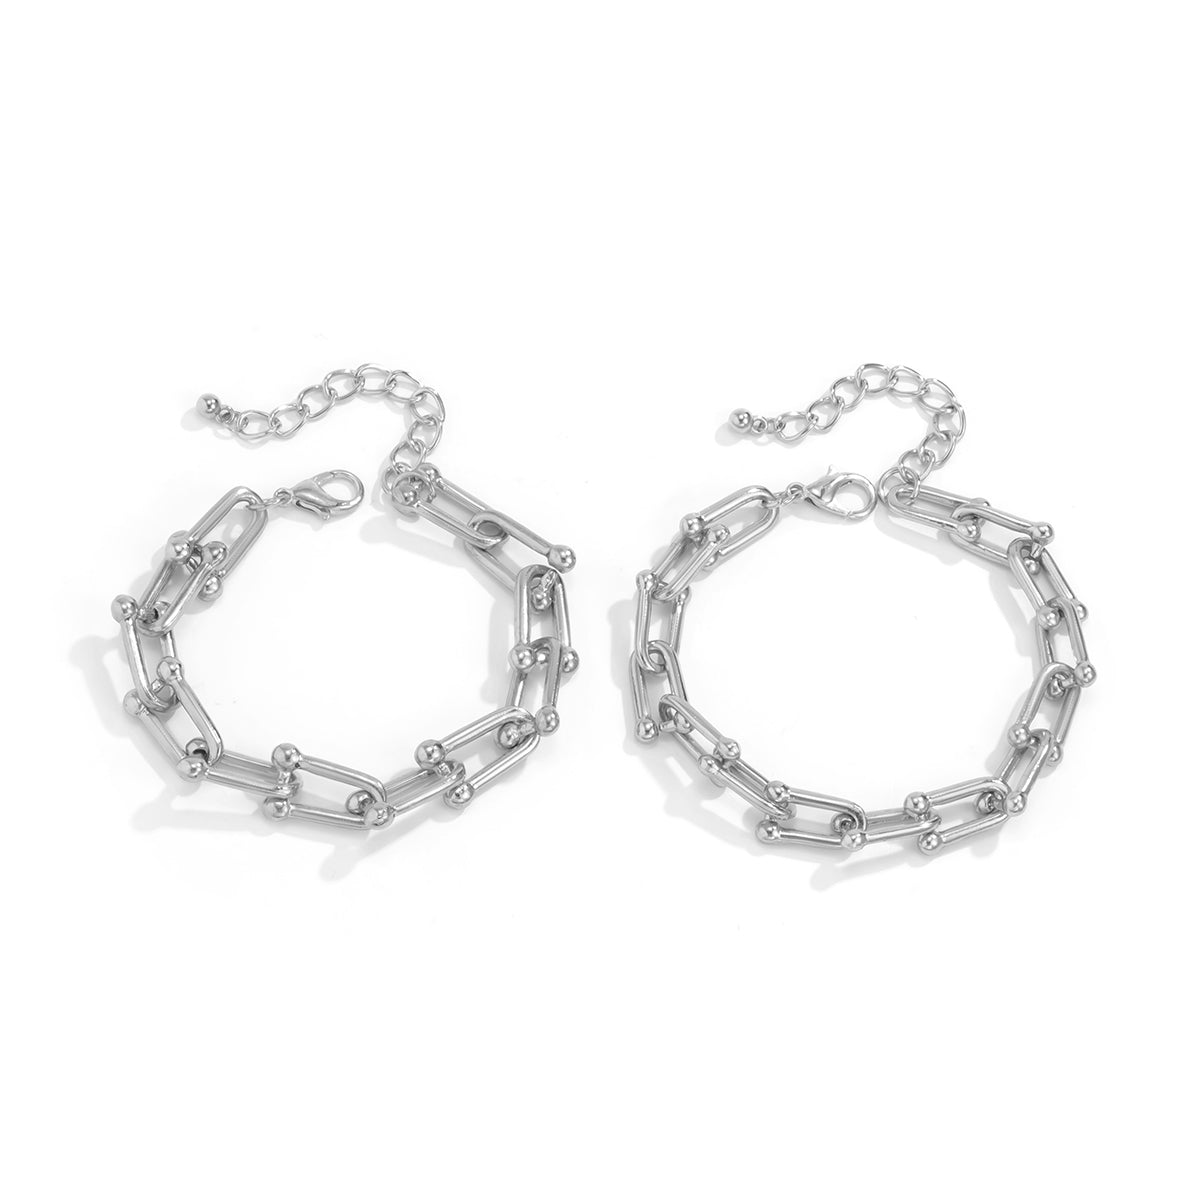 Silver-Plated Vachette Chain Bracelet Set